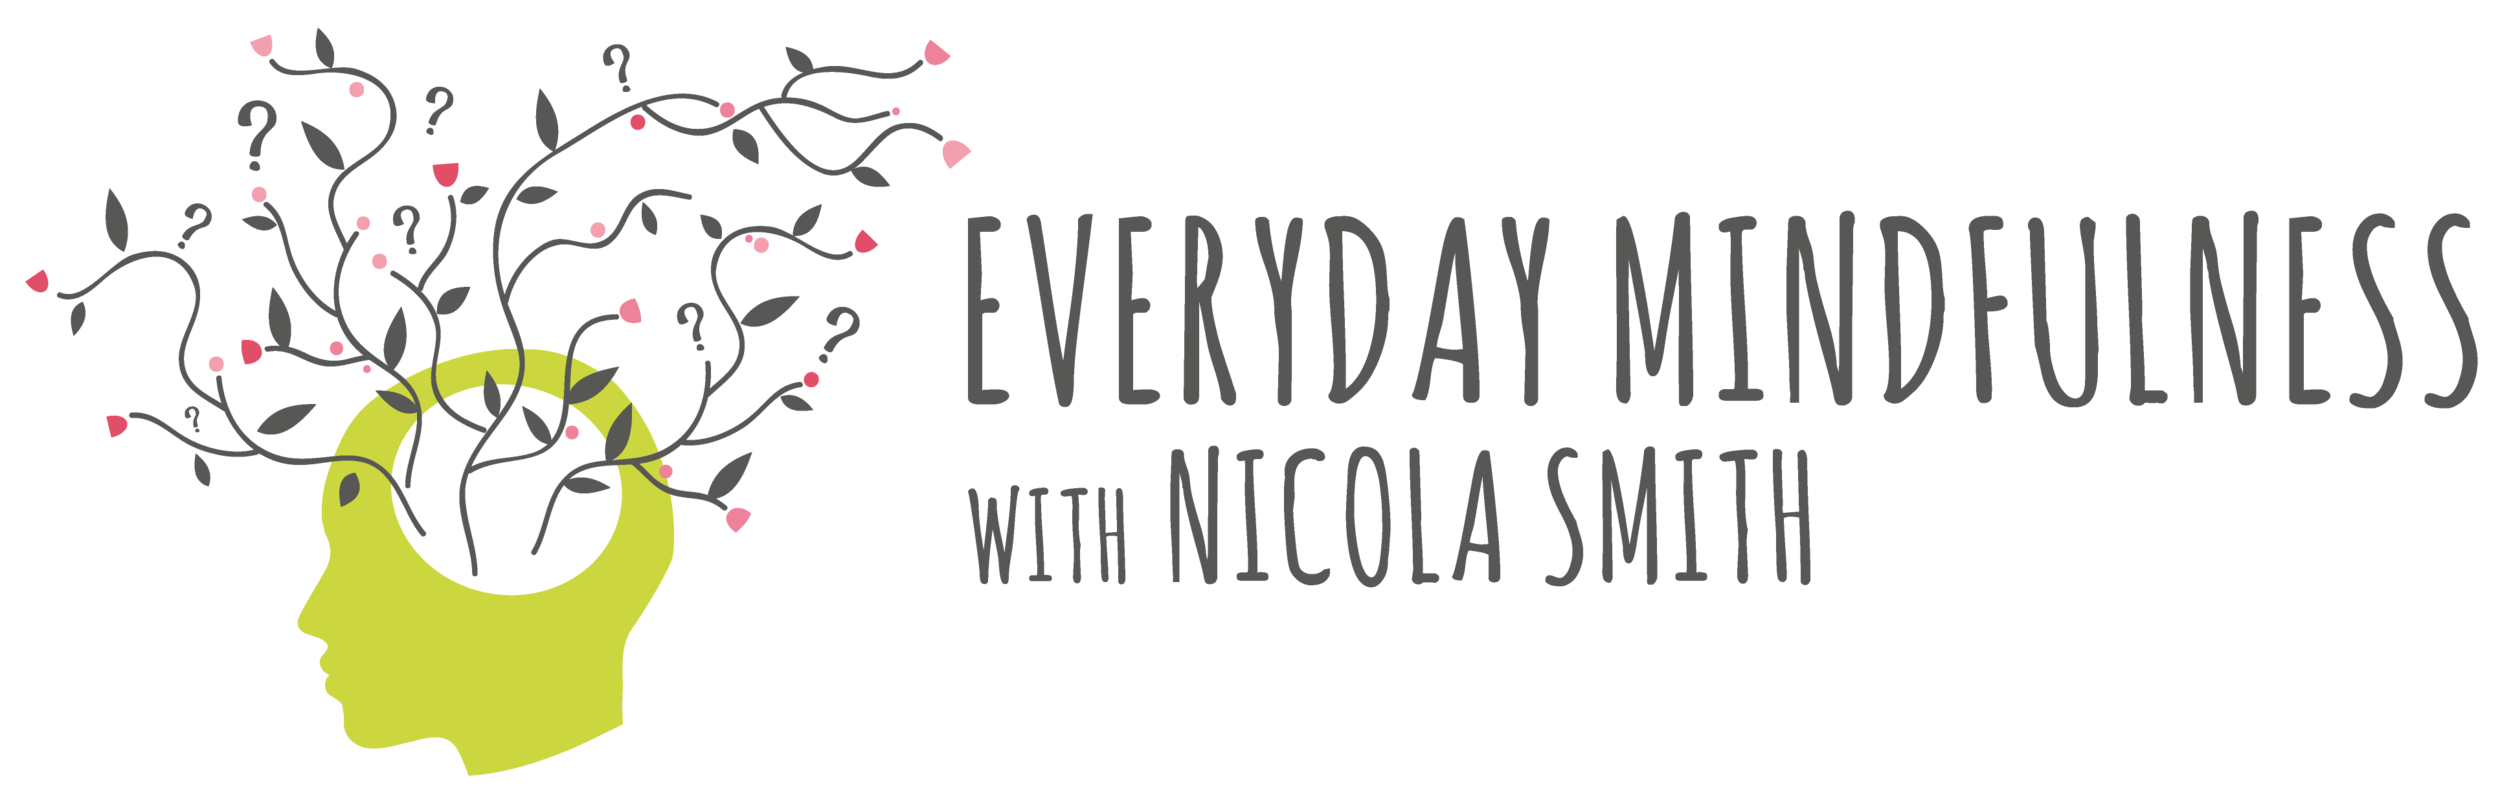 Everyday Mindfulness with Nicola Smith